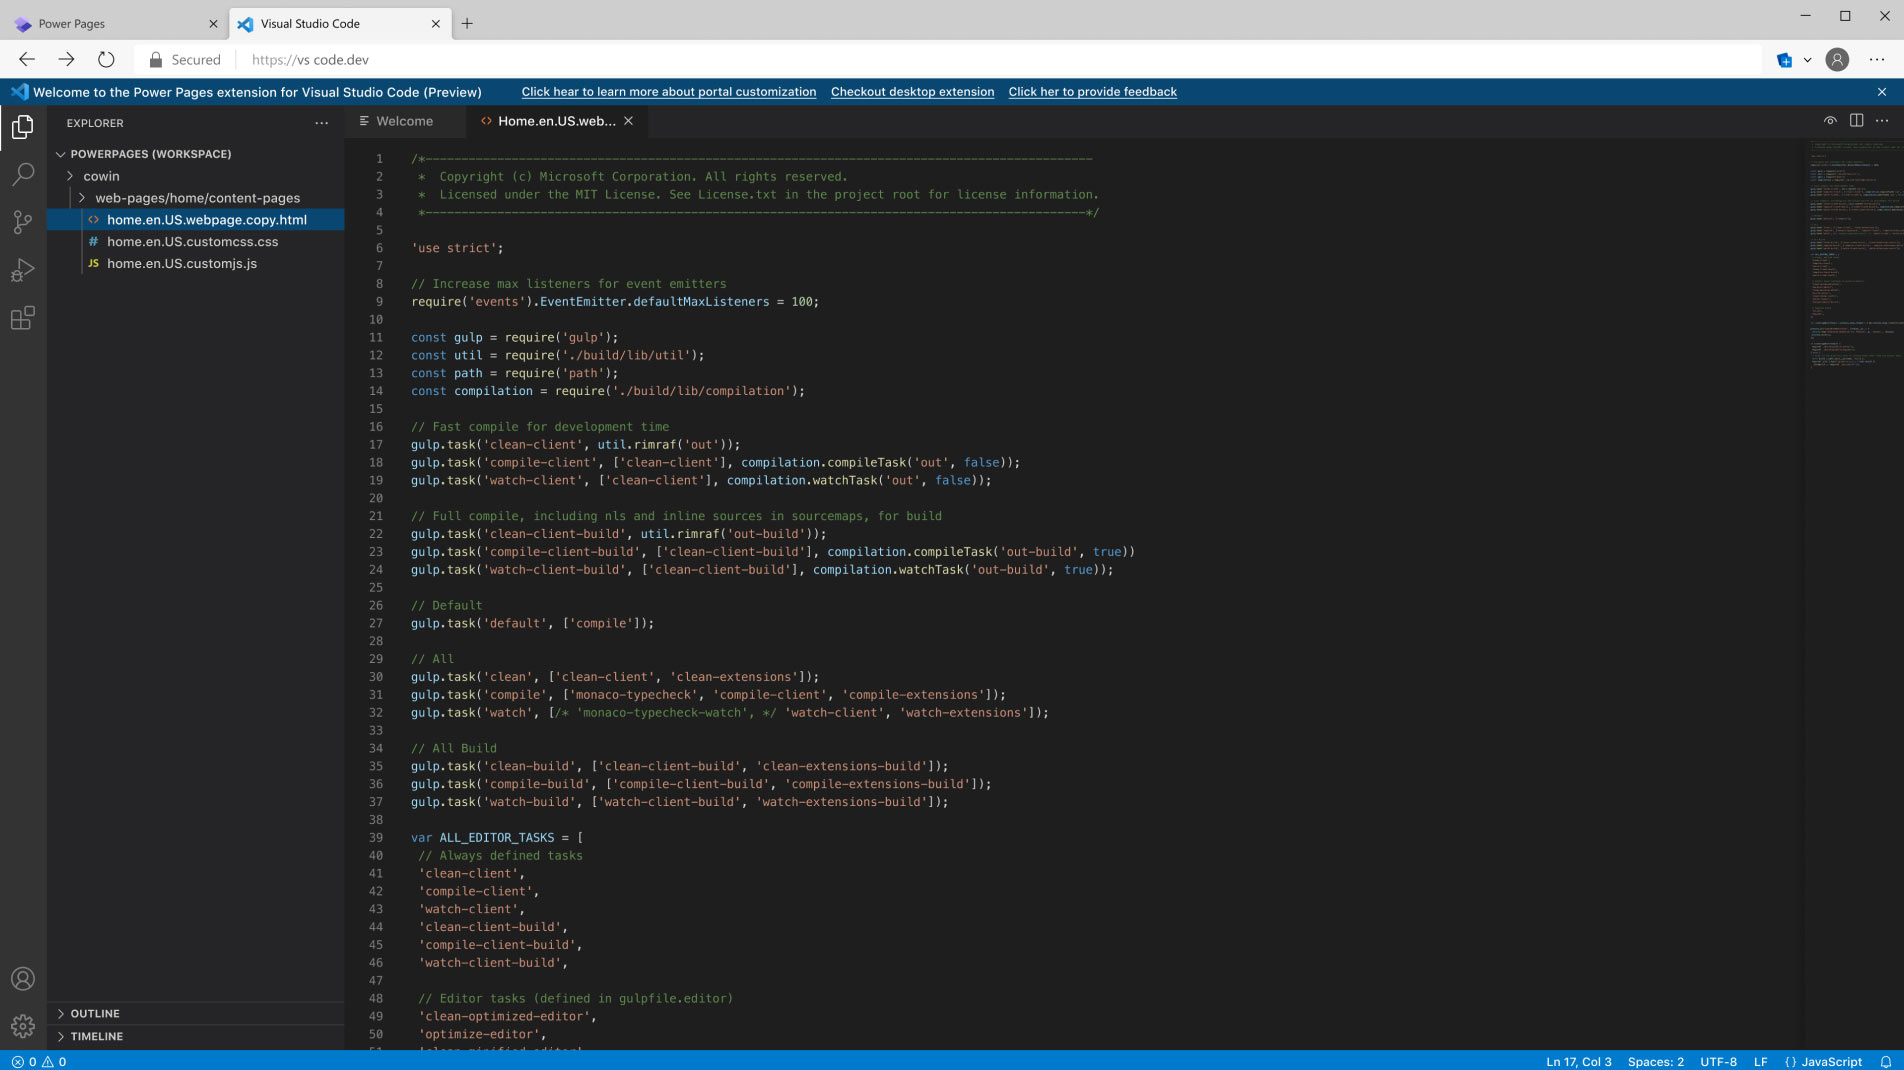 Visual Studio Code uzantısı ile Power Pages uygulaması